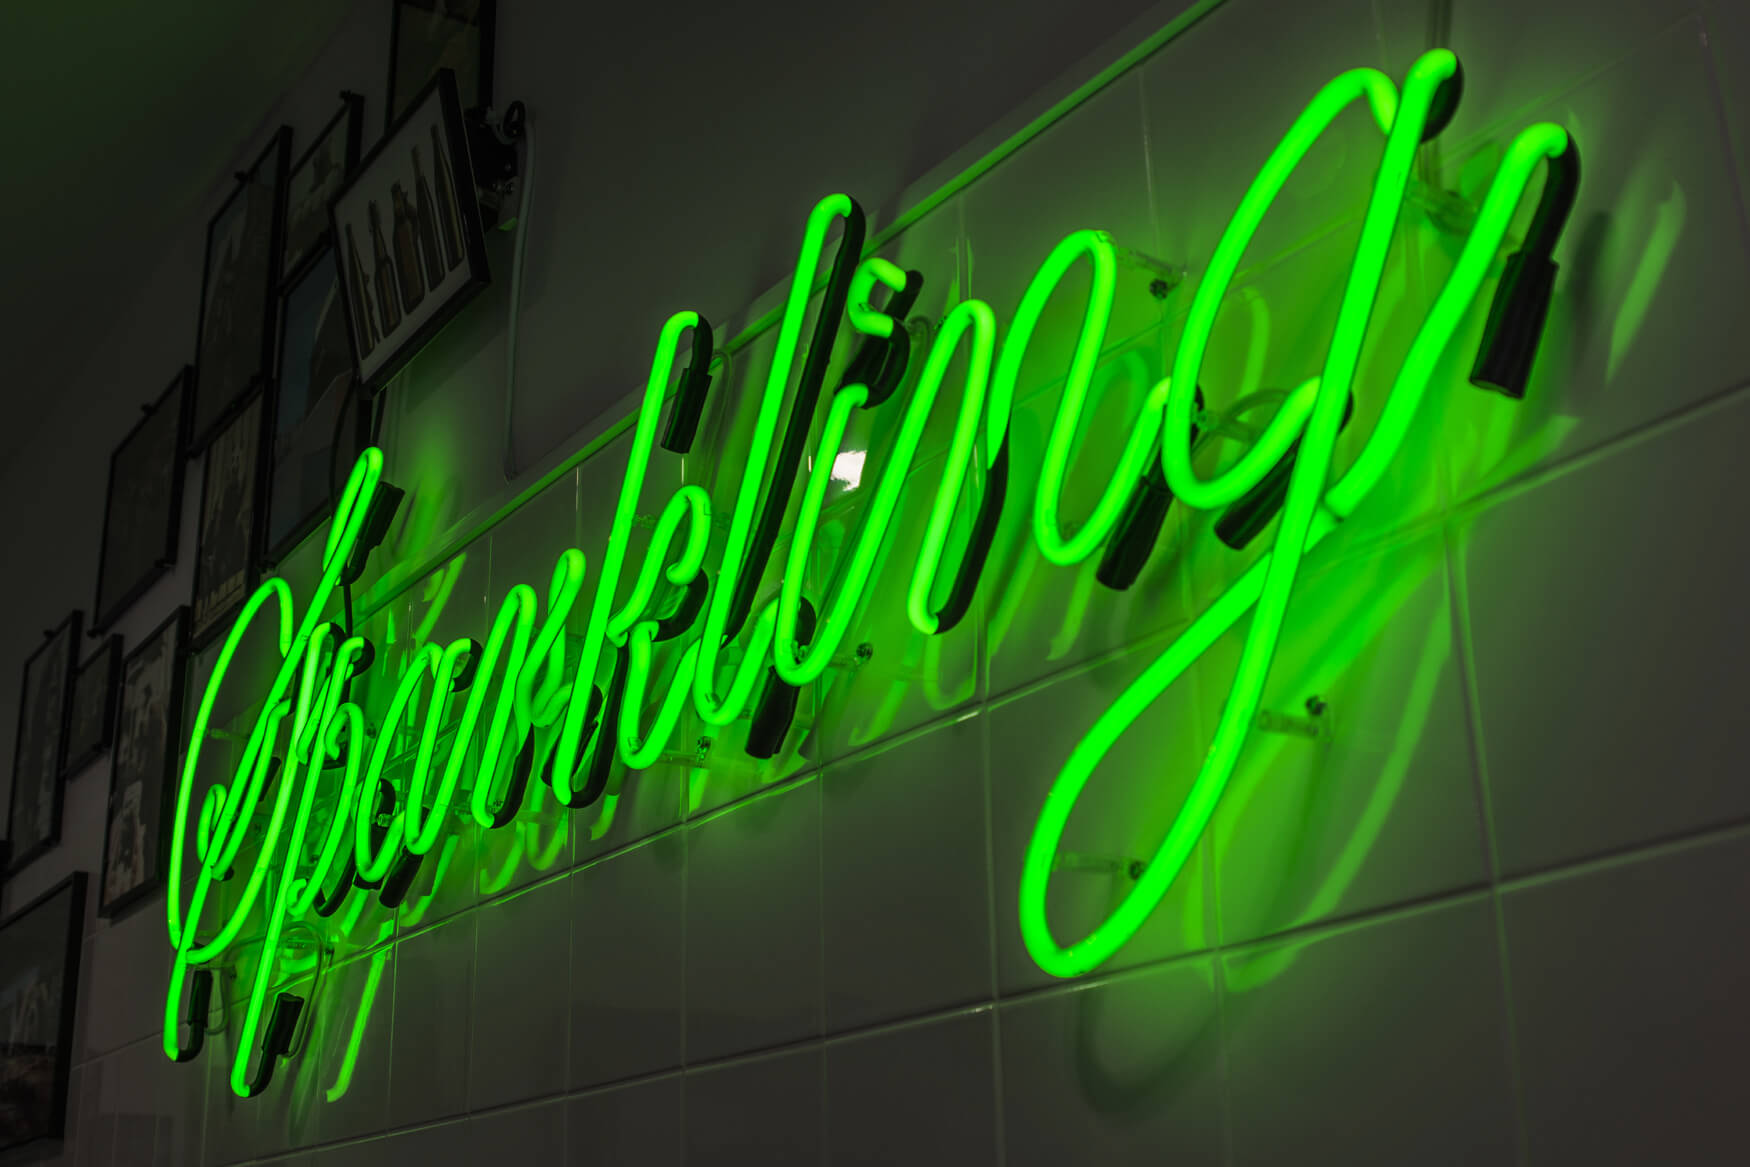 Chispeante - neón-brillante-iluminación-verde-neón-en-los-azulejos-neón-en-la-pared-neón-dentro-del-restaurante-moderno-neón-letras-neón-señal